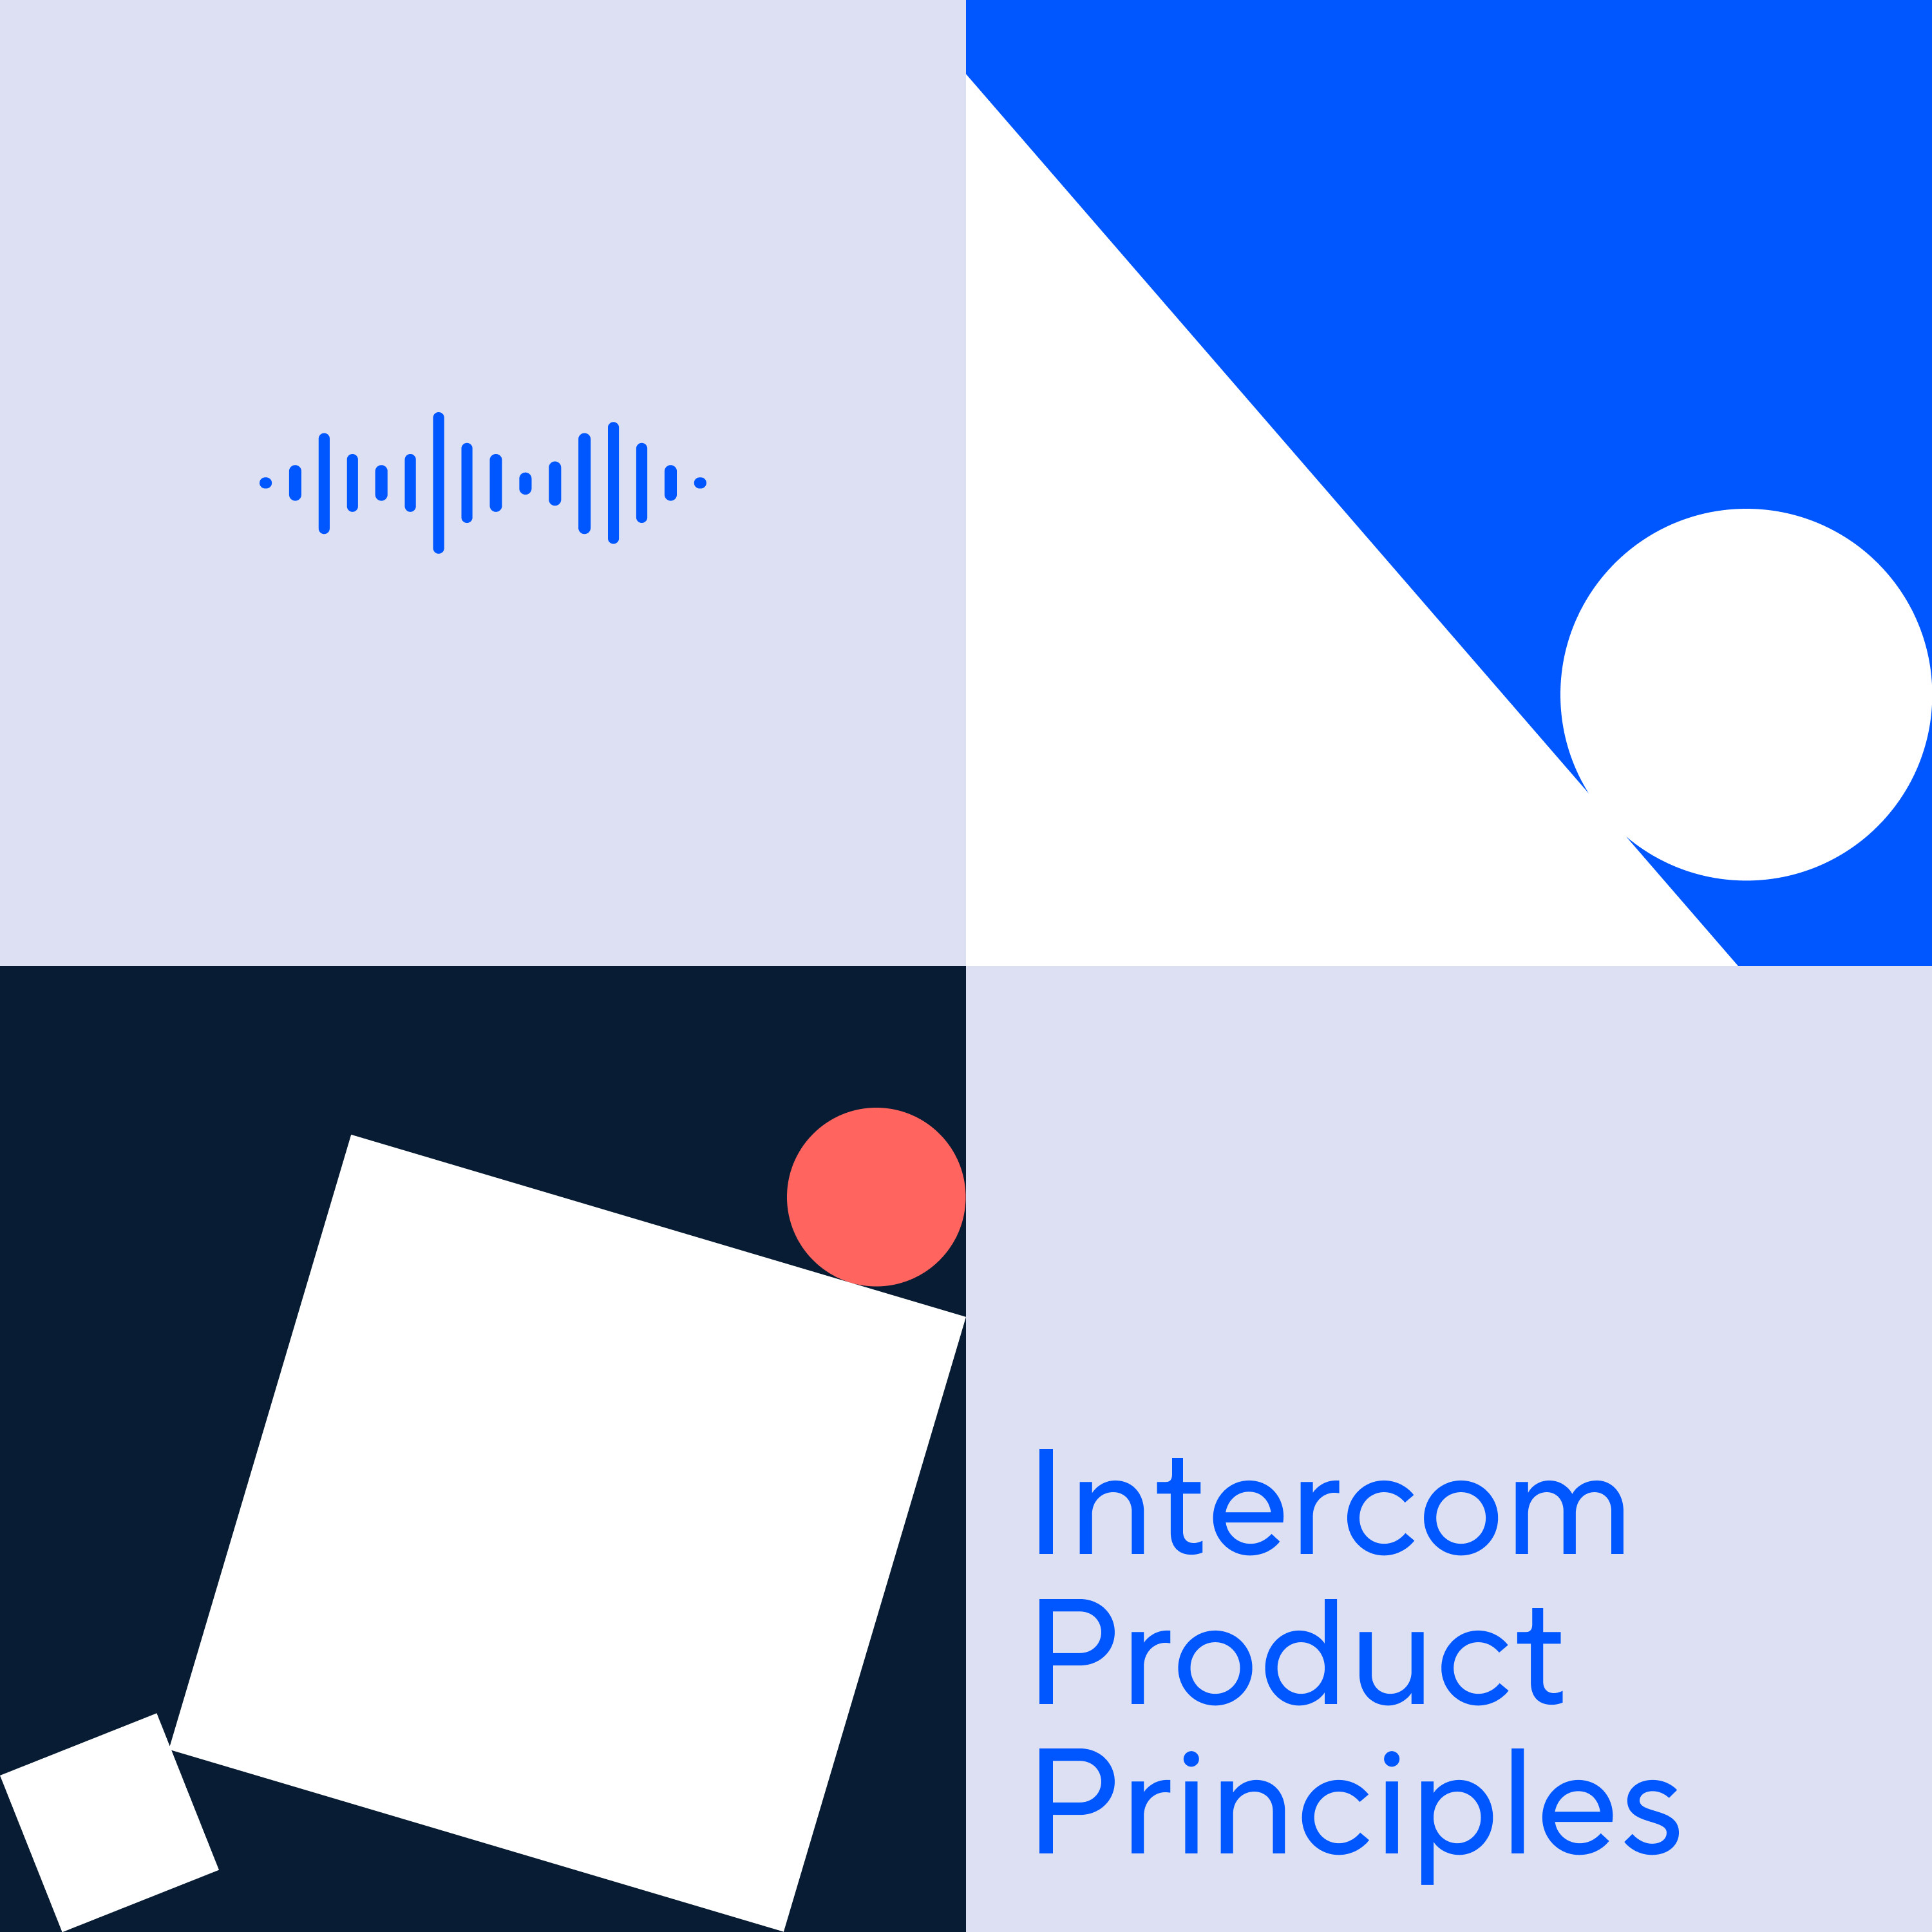 Intercom’s product principles: Back to the basics